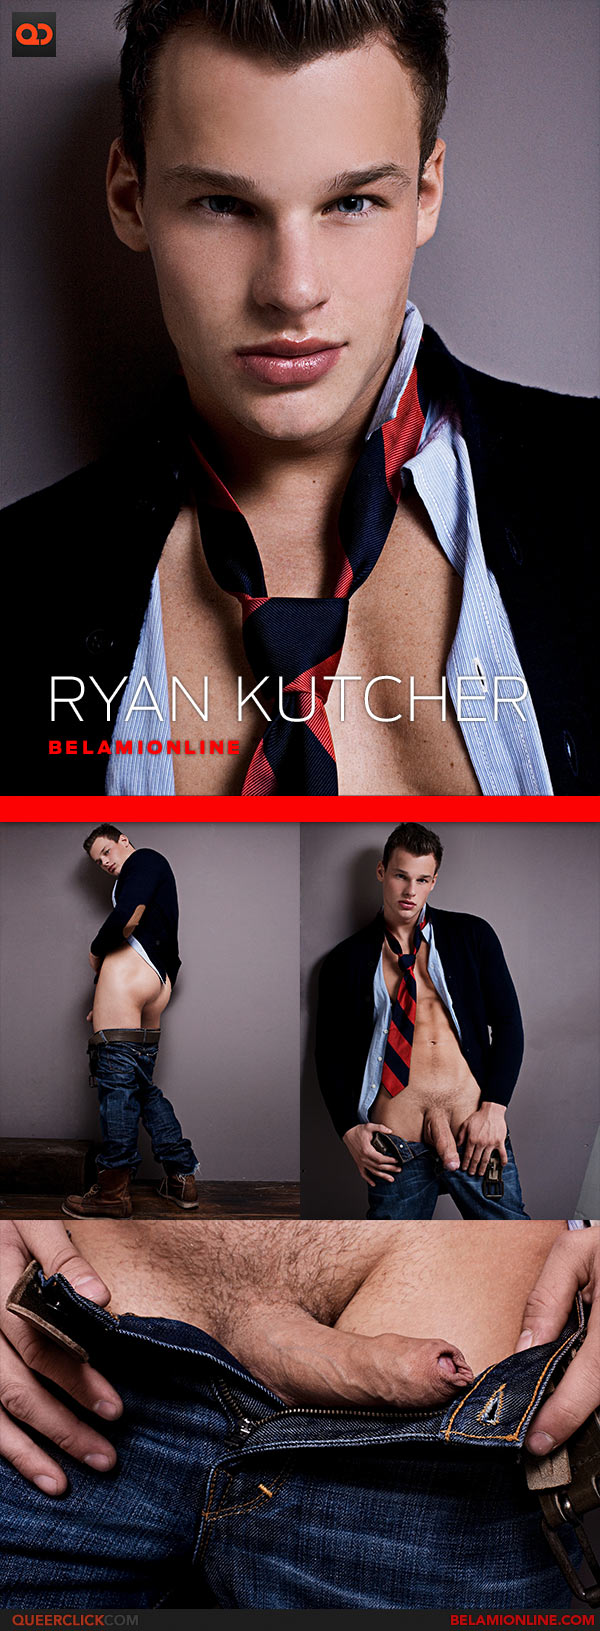 Bel Ami Online: Ryan Kutcher - Art Collection